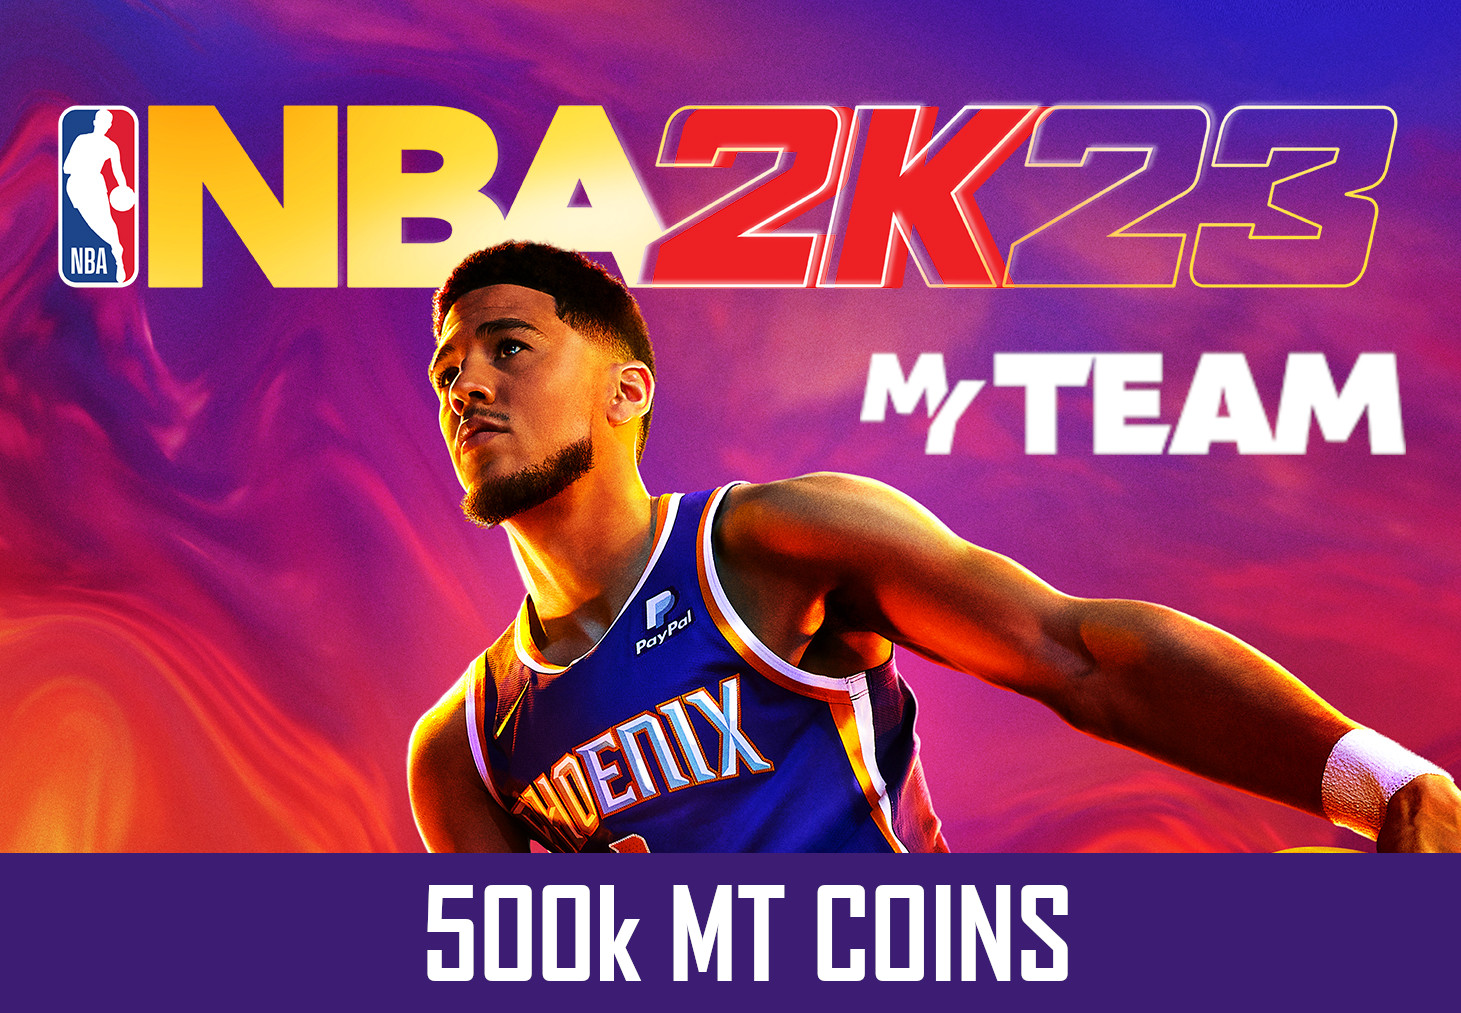 NBA 2K23 - 500k MT Coins - GLOBAL PS4/PS5